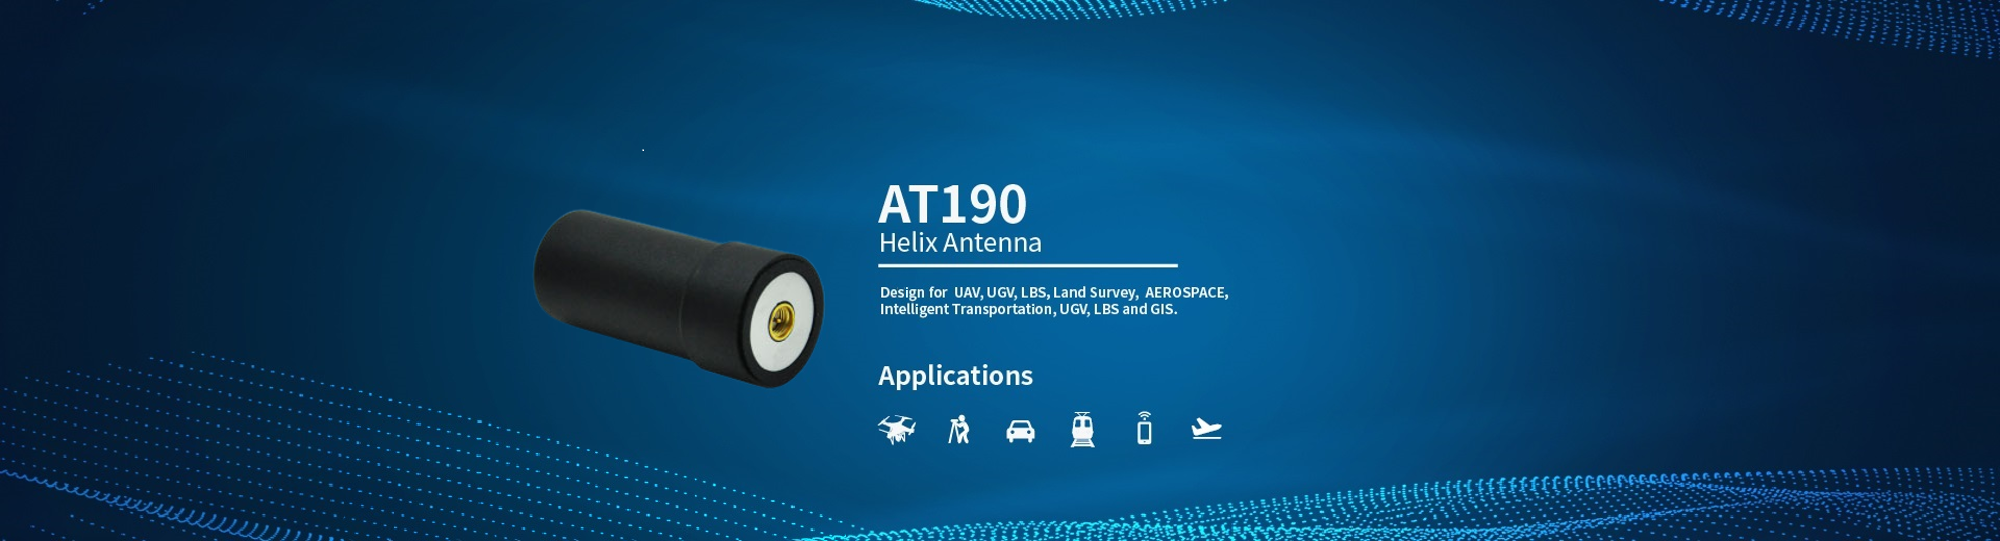 AT190 Helix antenna